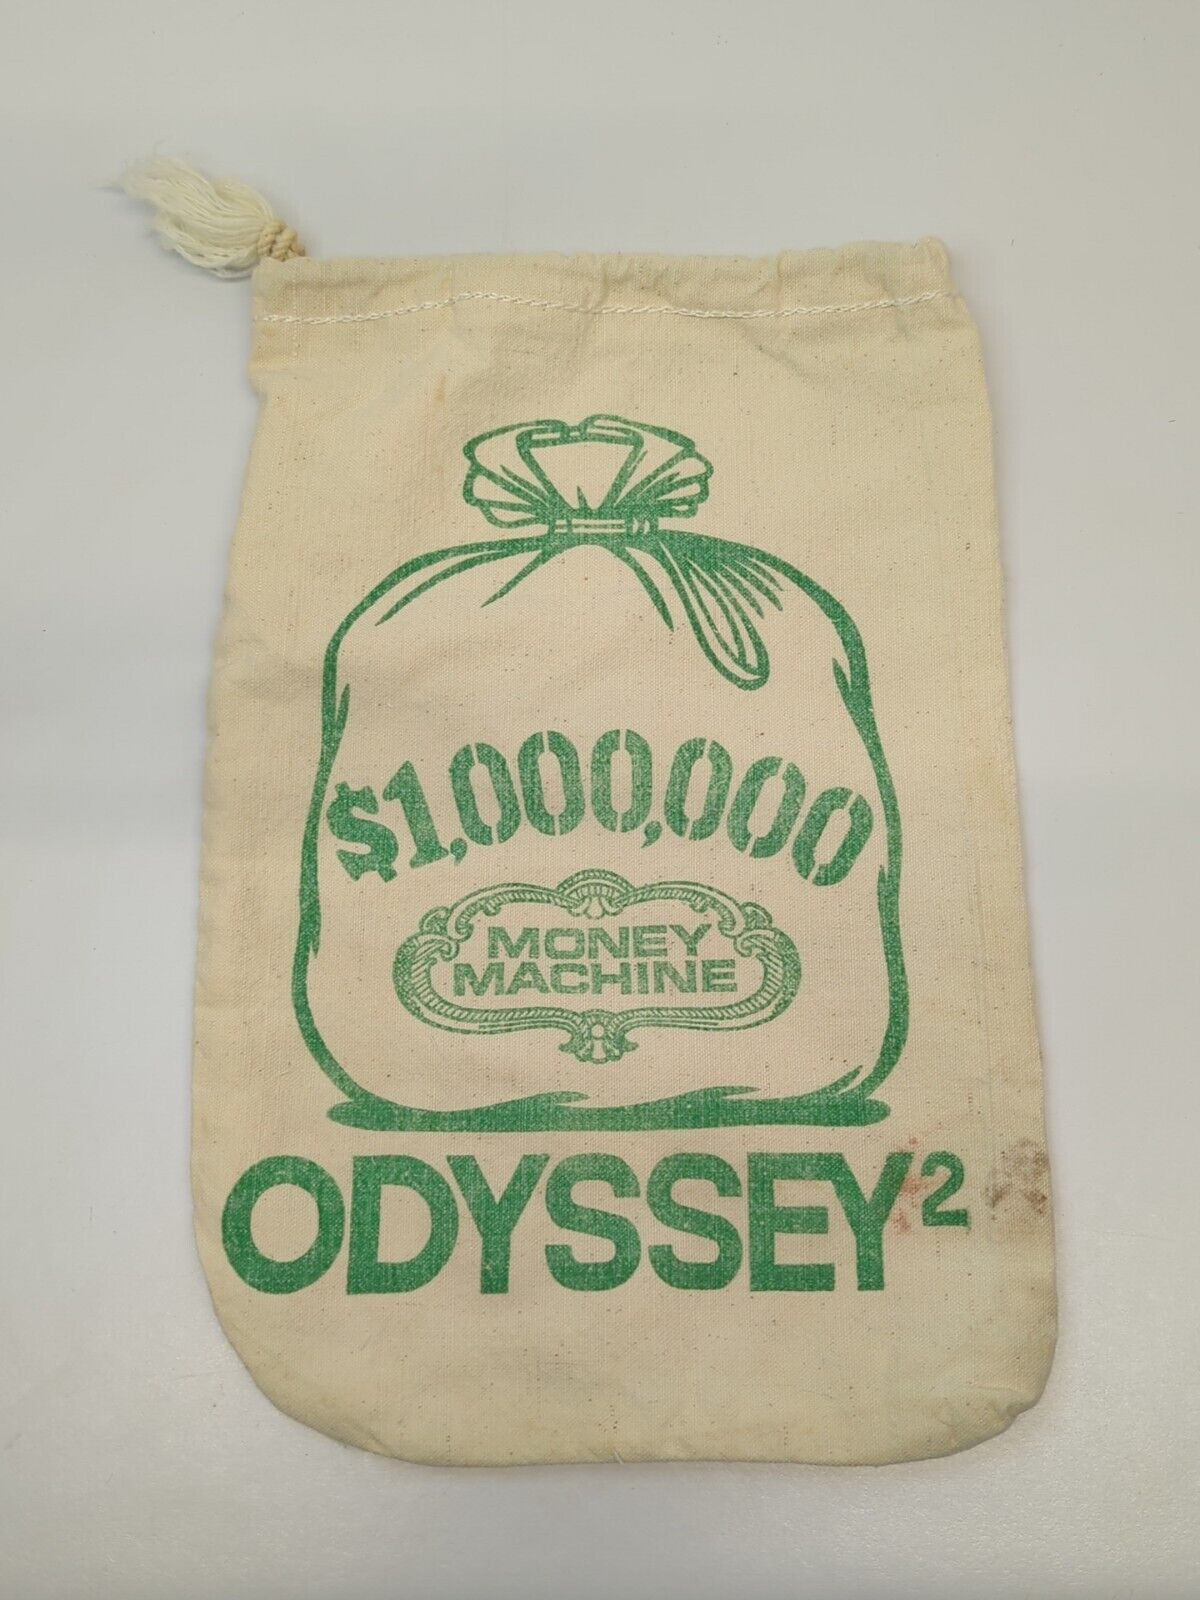 Magnavox Odyssey 2 Promo $1,000,000 Money Machine Drawstring Bag Rare 1982 1983